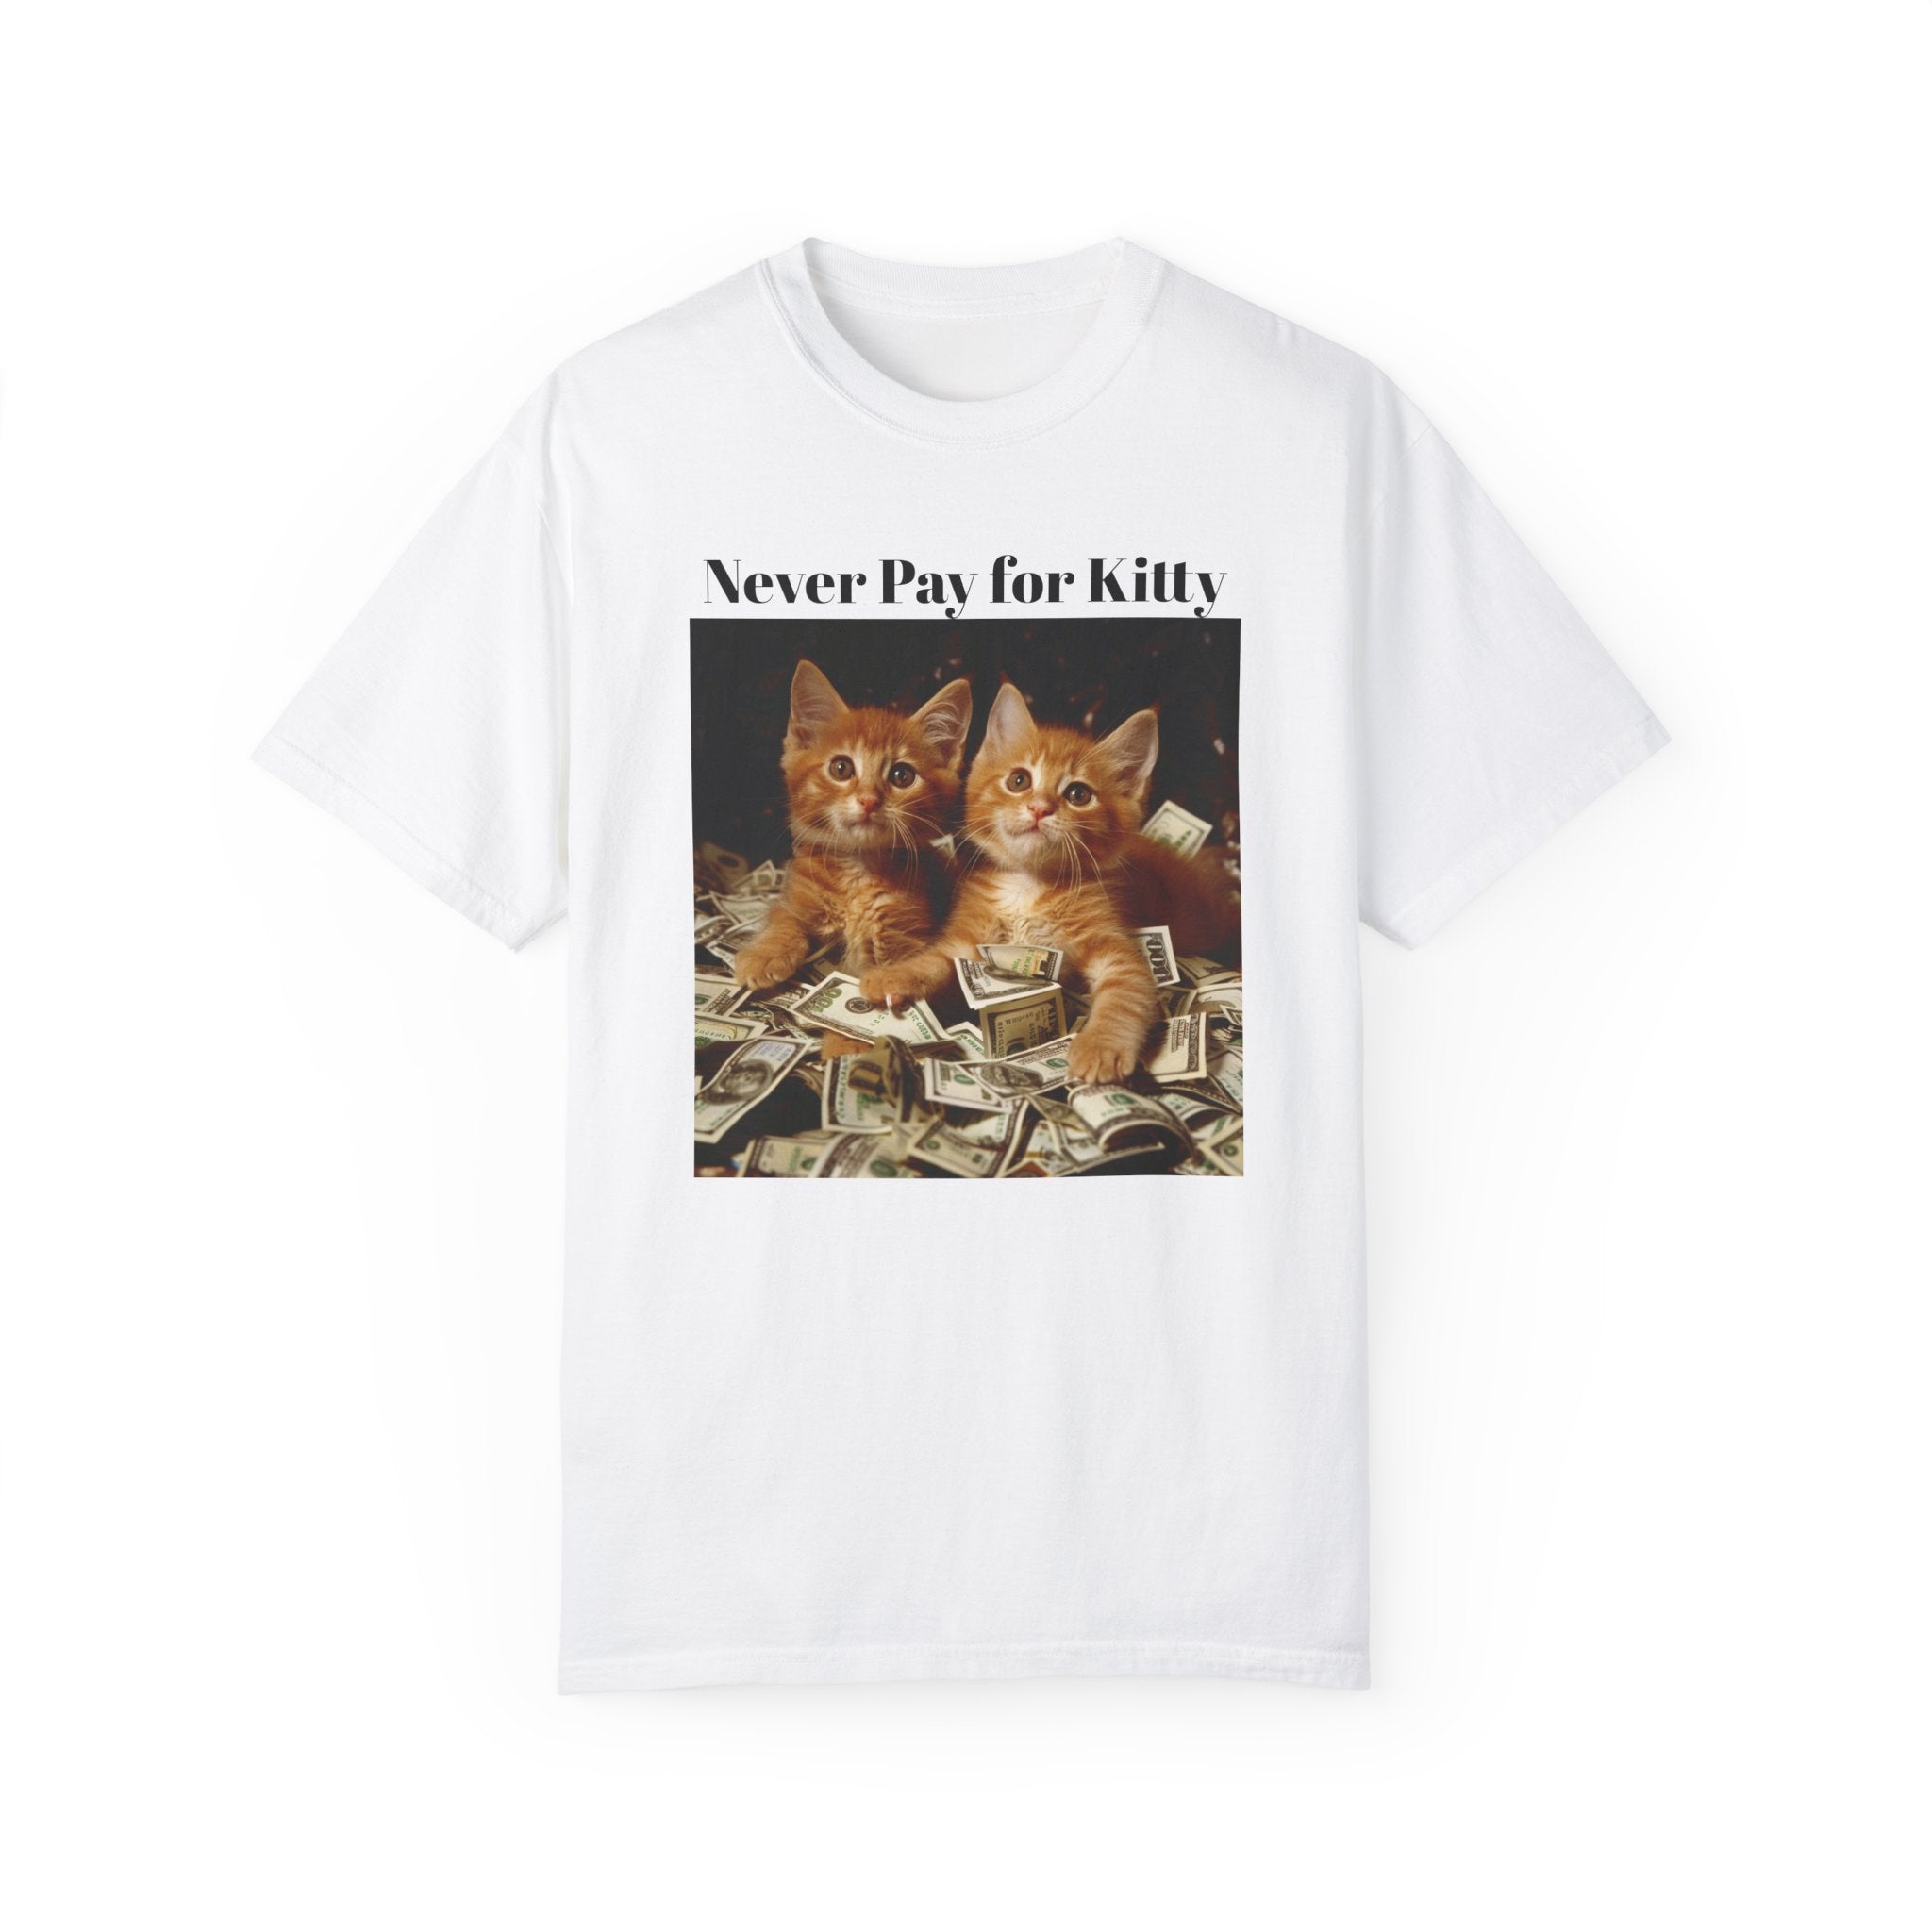 Cash Kittens: 'Never Pay for Kitty' - Dating Humor Unisex Garment-Dyed T-Shirt